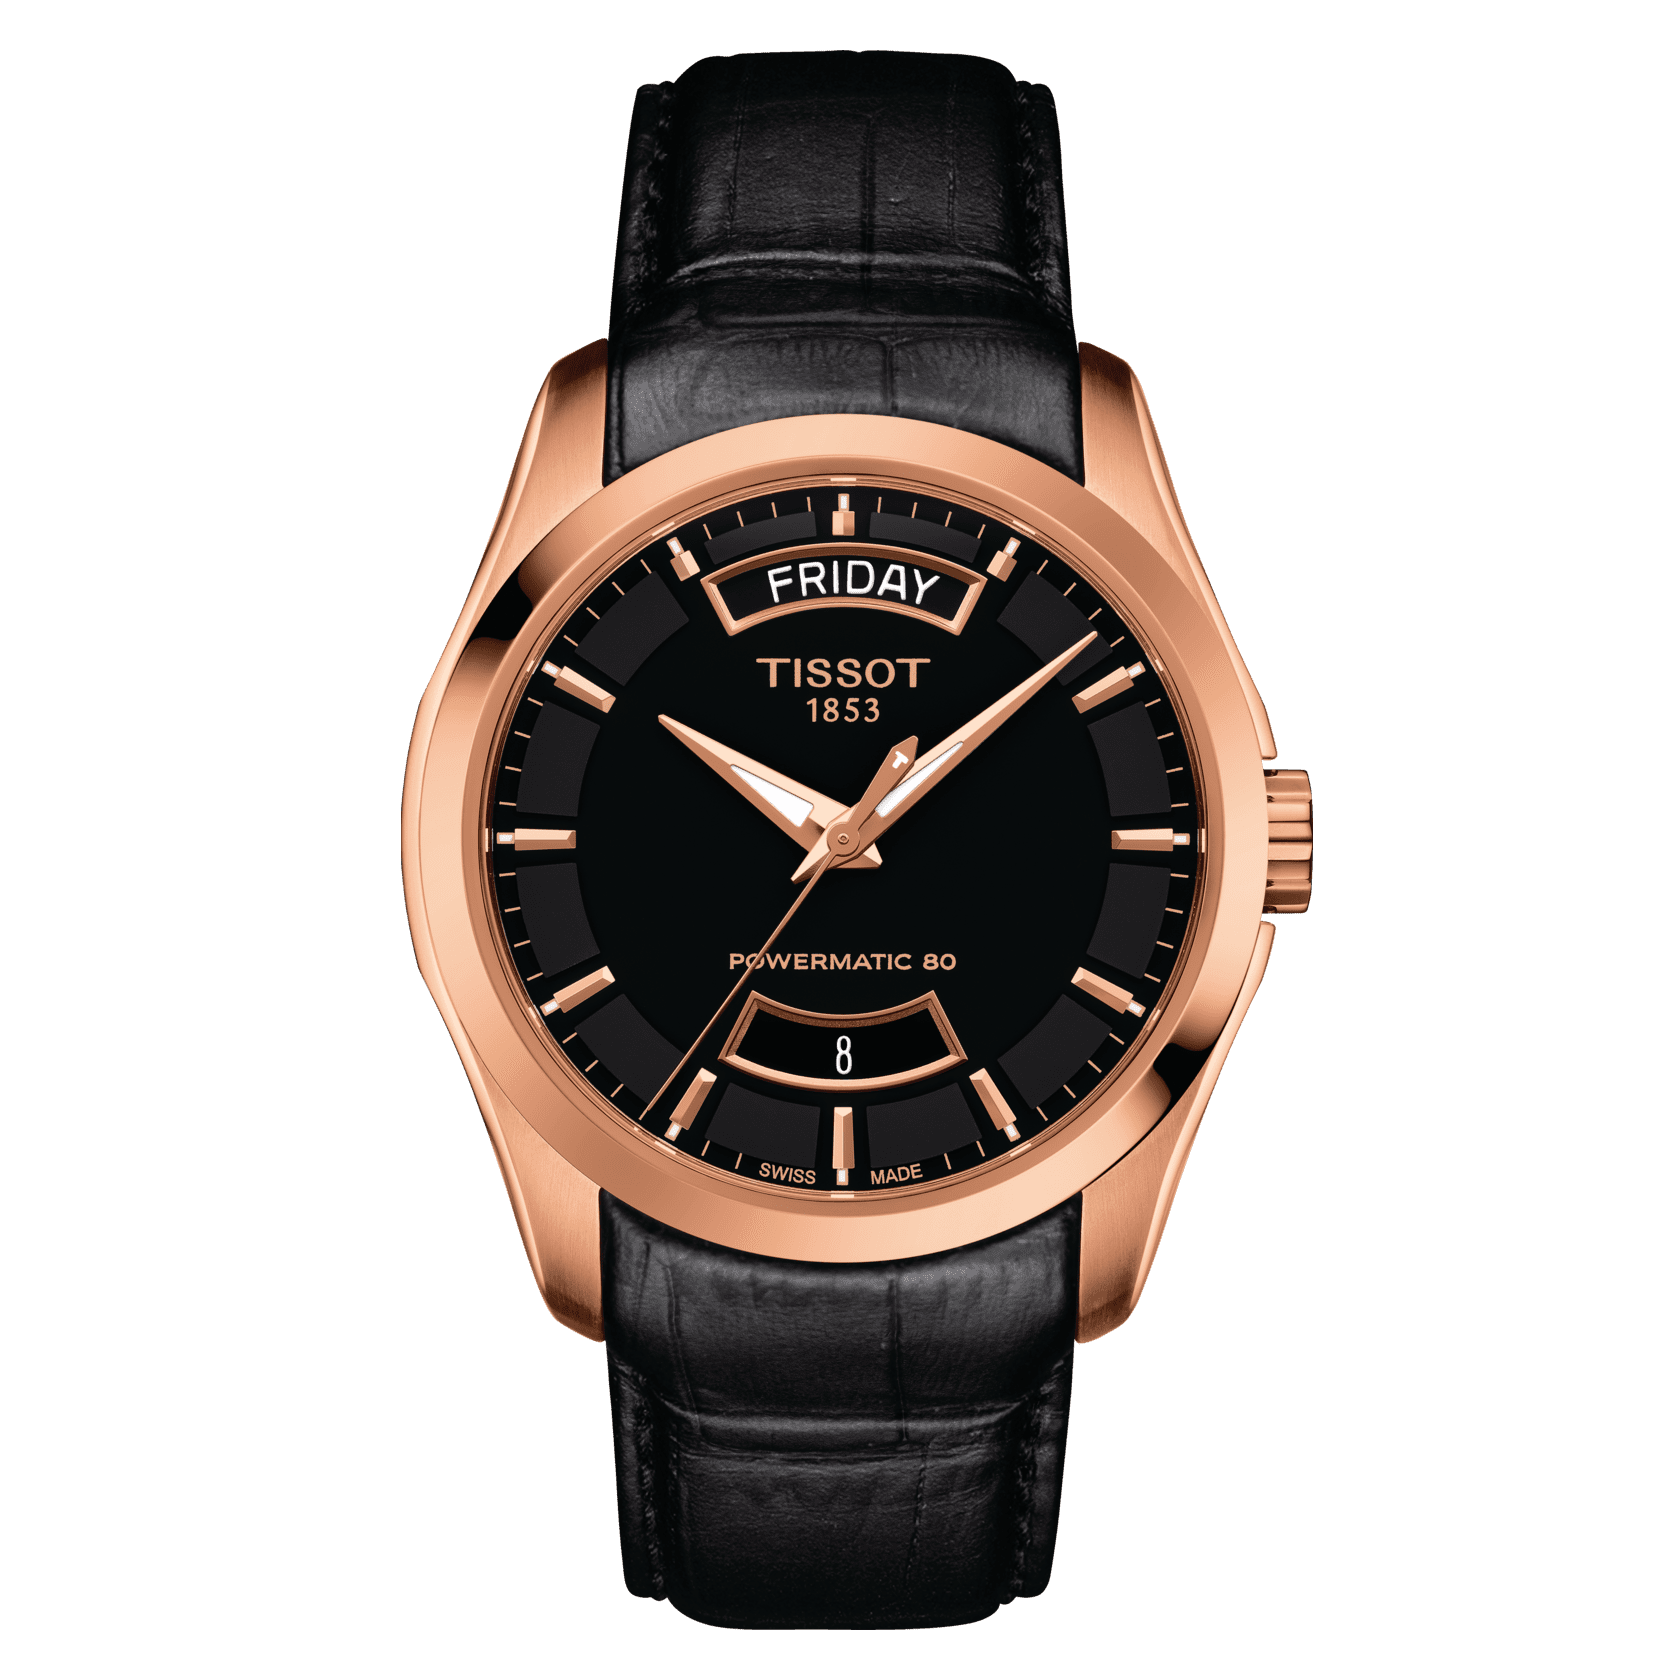 Cabestan Watches Replica